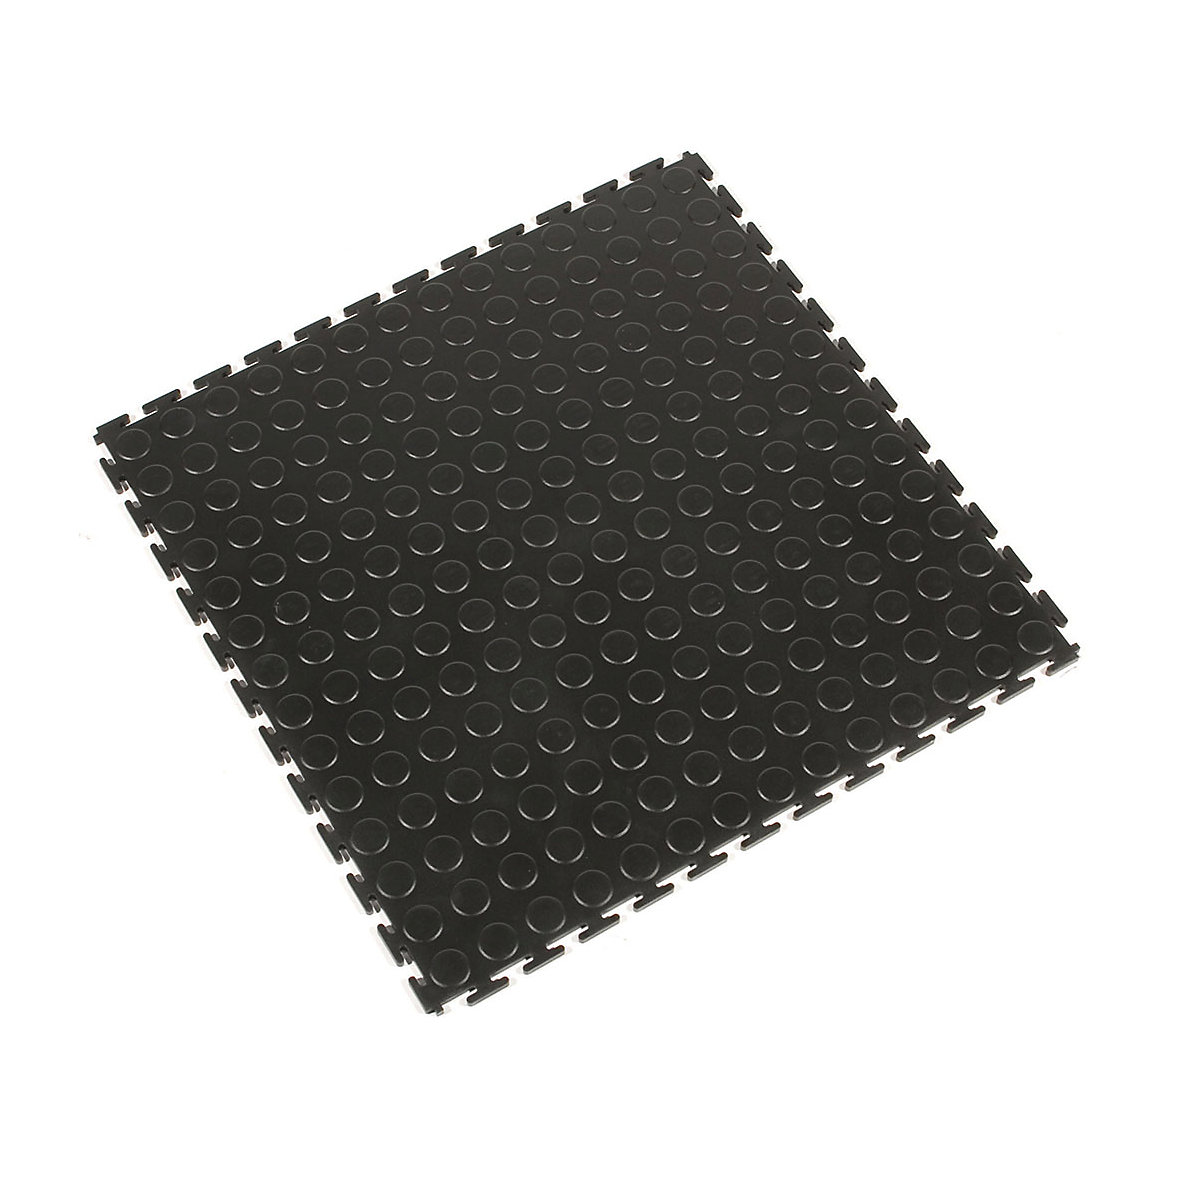 Tough-Lock PVC floor tiles - COBA